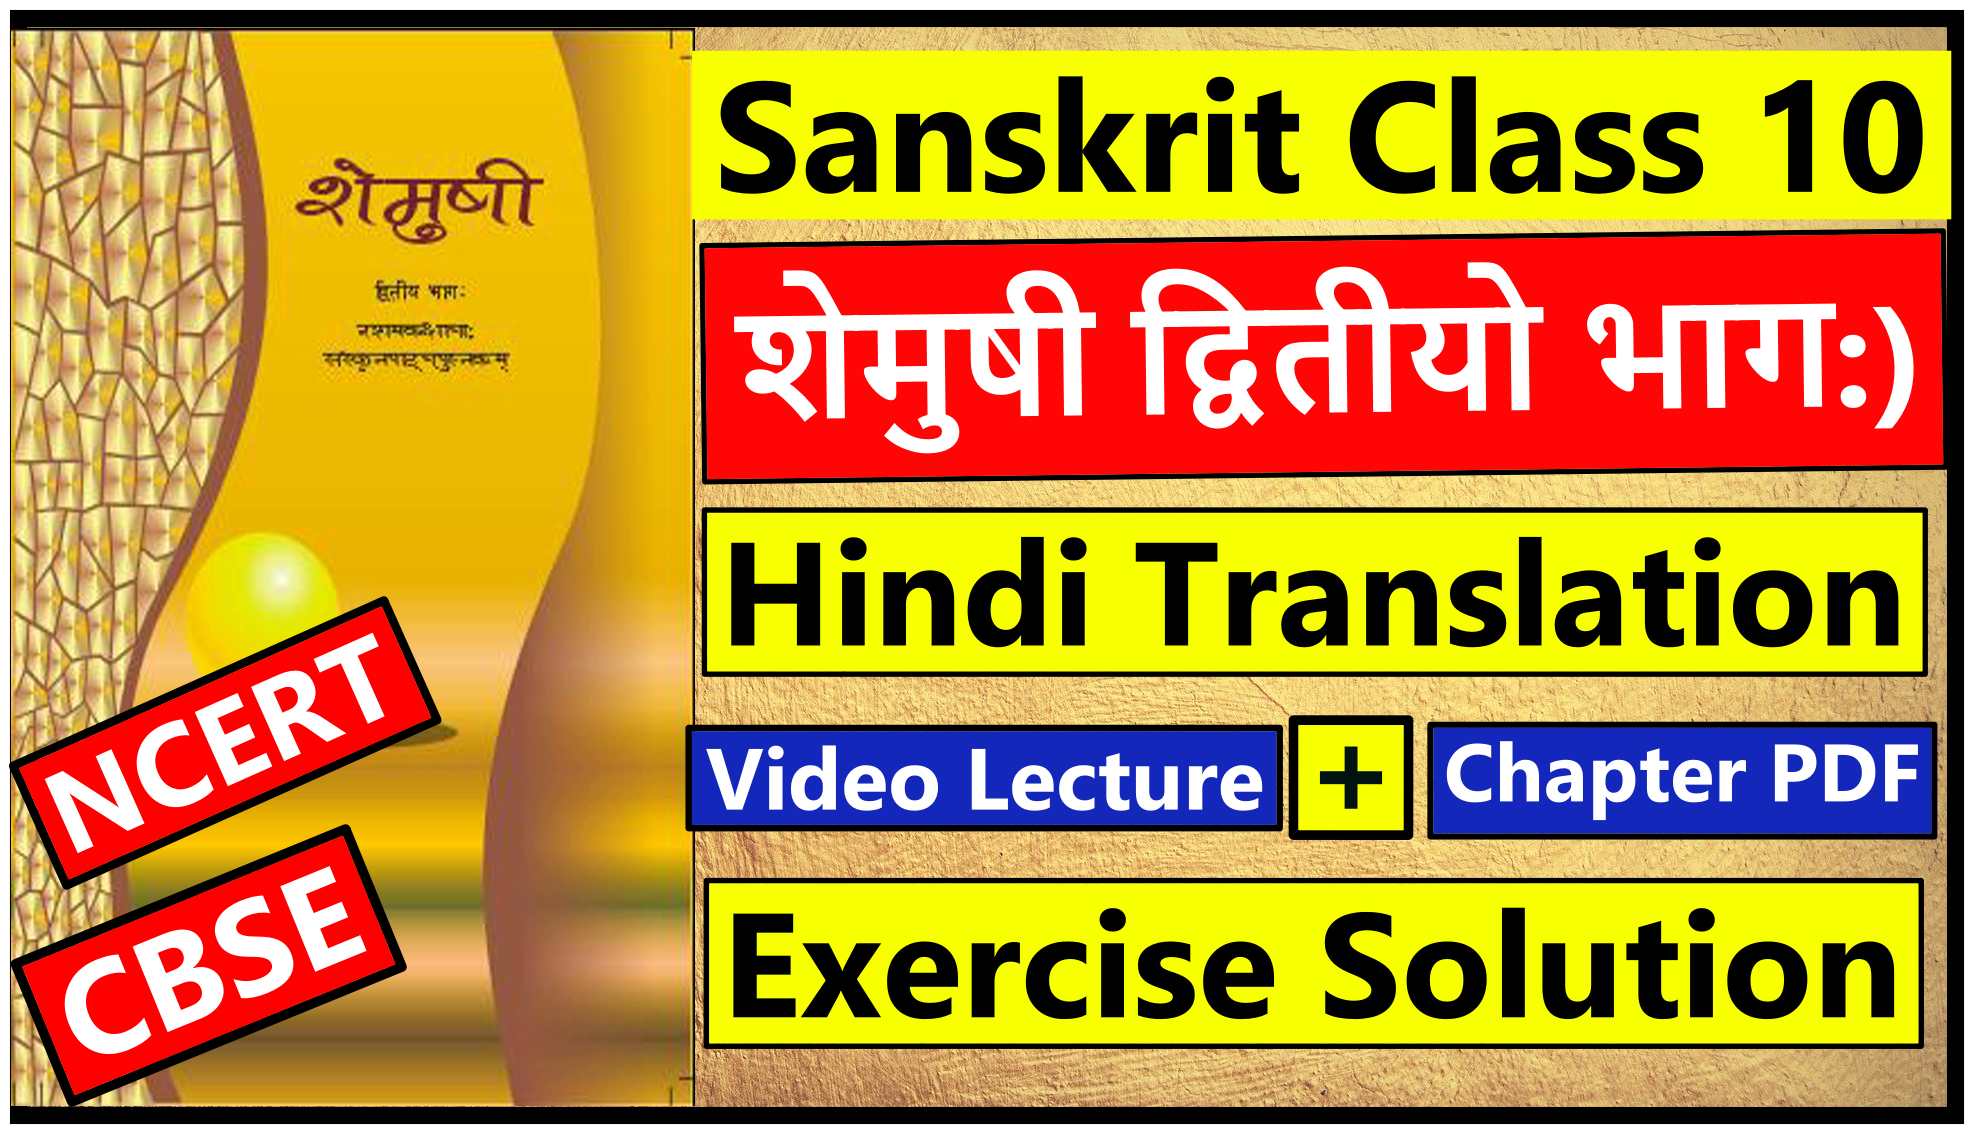 CBSE Sanskrit Class 10 (शेमुषी द्वितीयो भाग:)